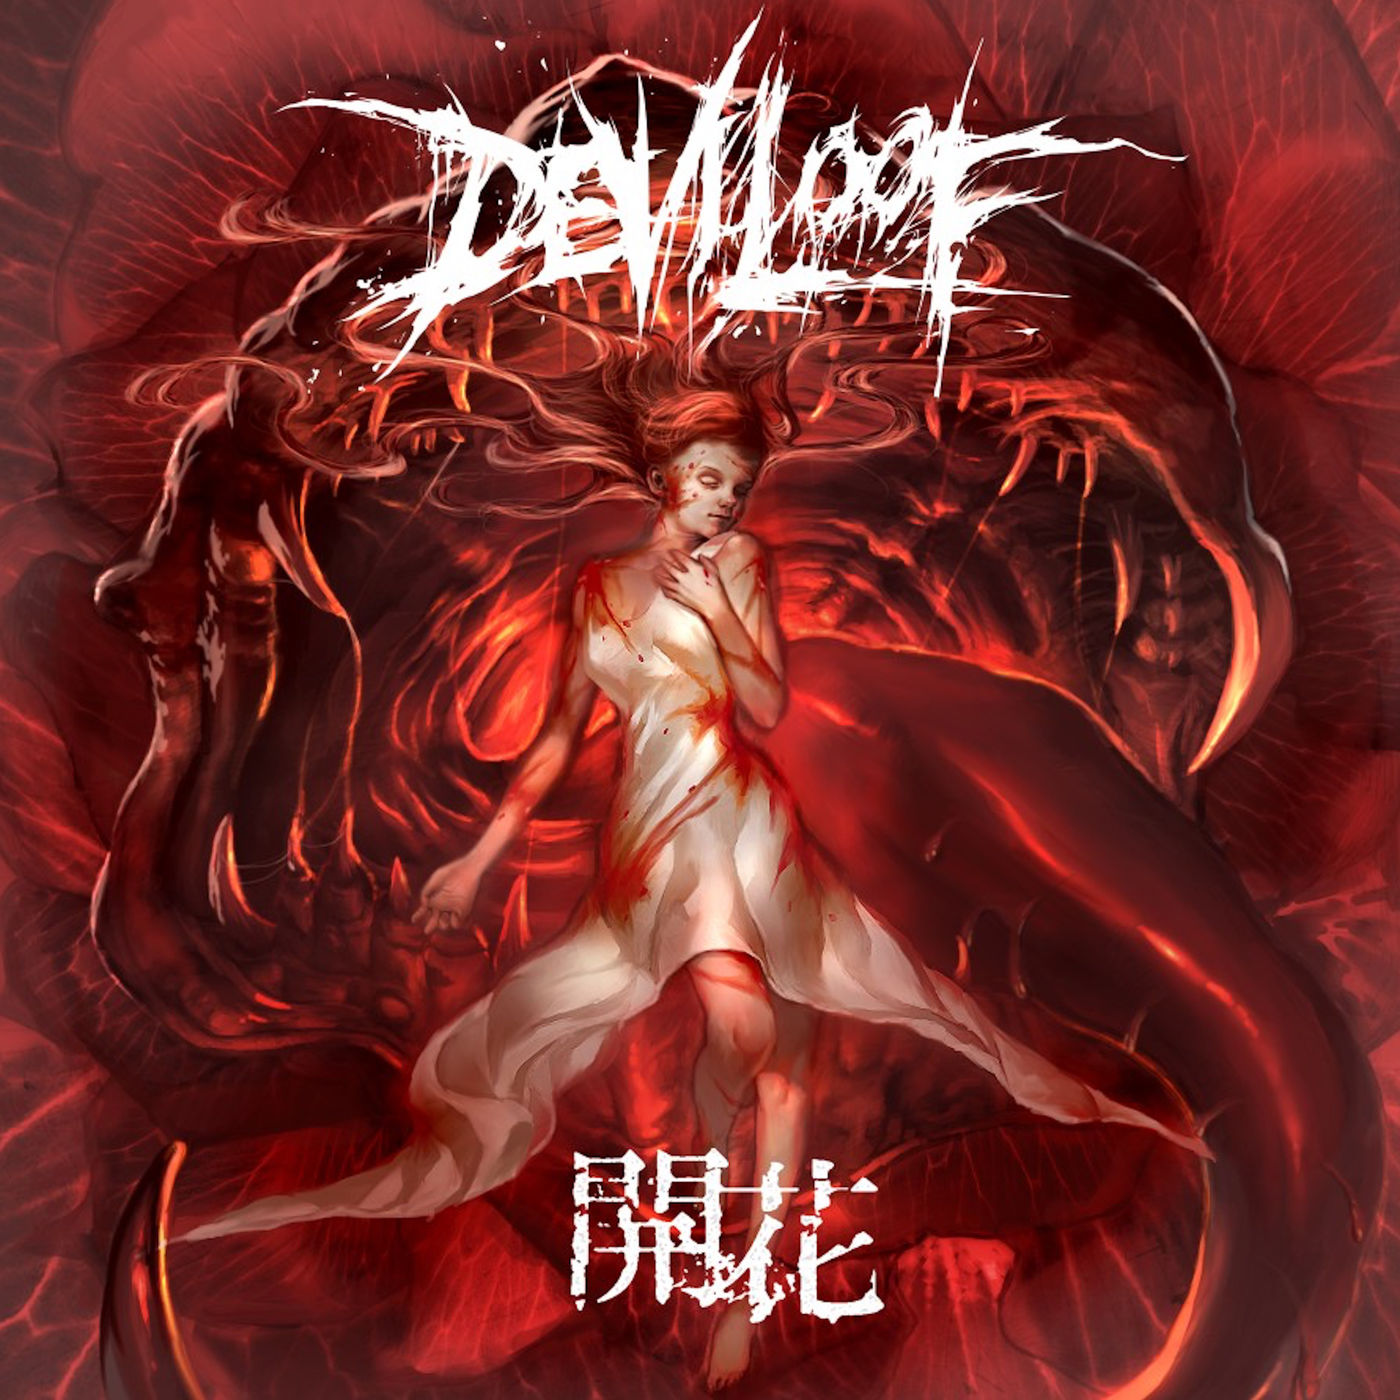 Deviloof - Kaika (2019)